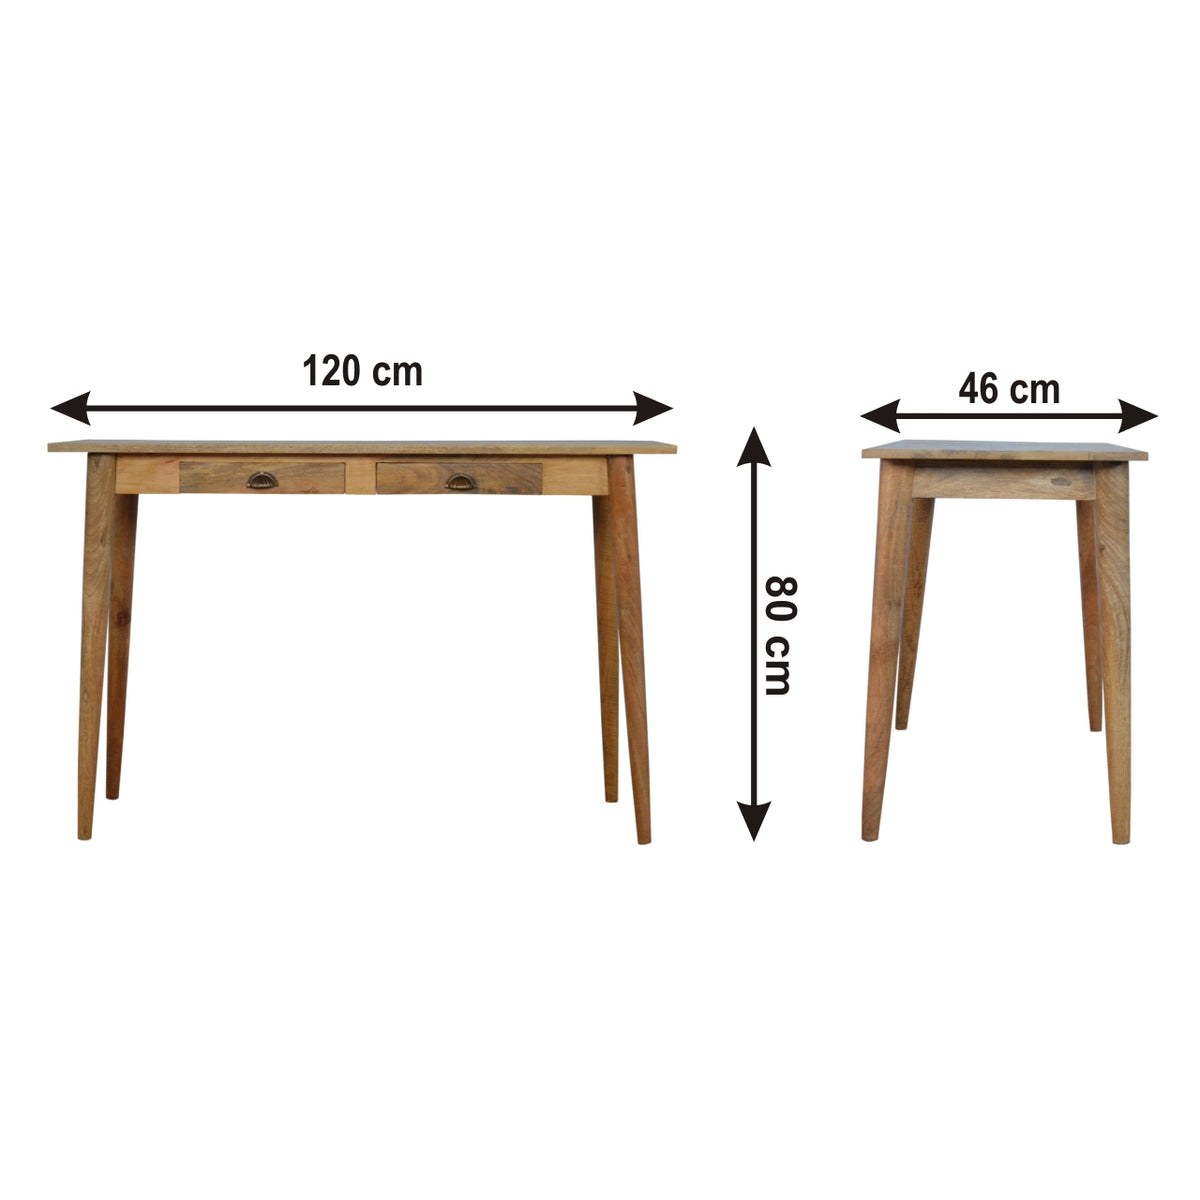 Wide Desk, Mango Wood Desk for sale uk slim desk 46cm deep desk wooden desk max 120cm wooden desk max 46cm deep narrow skinny desk uk